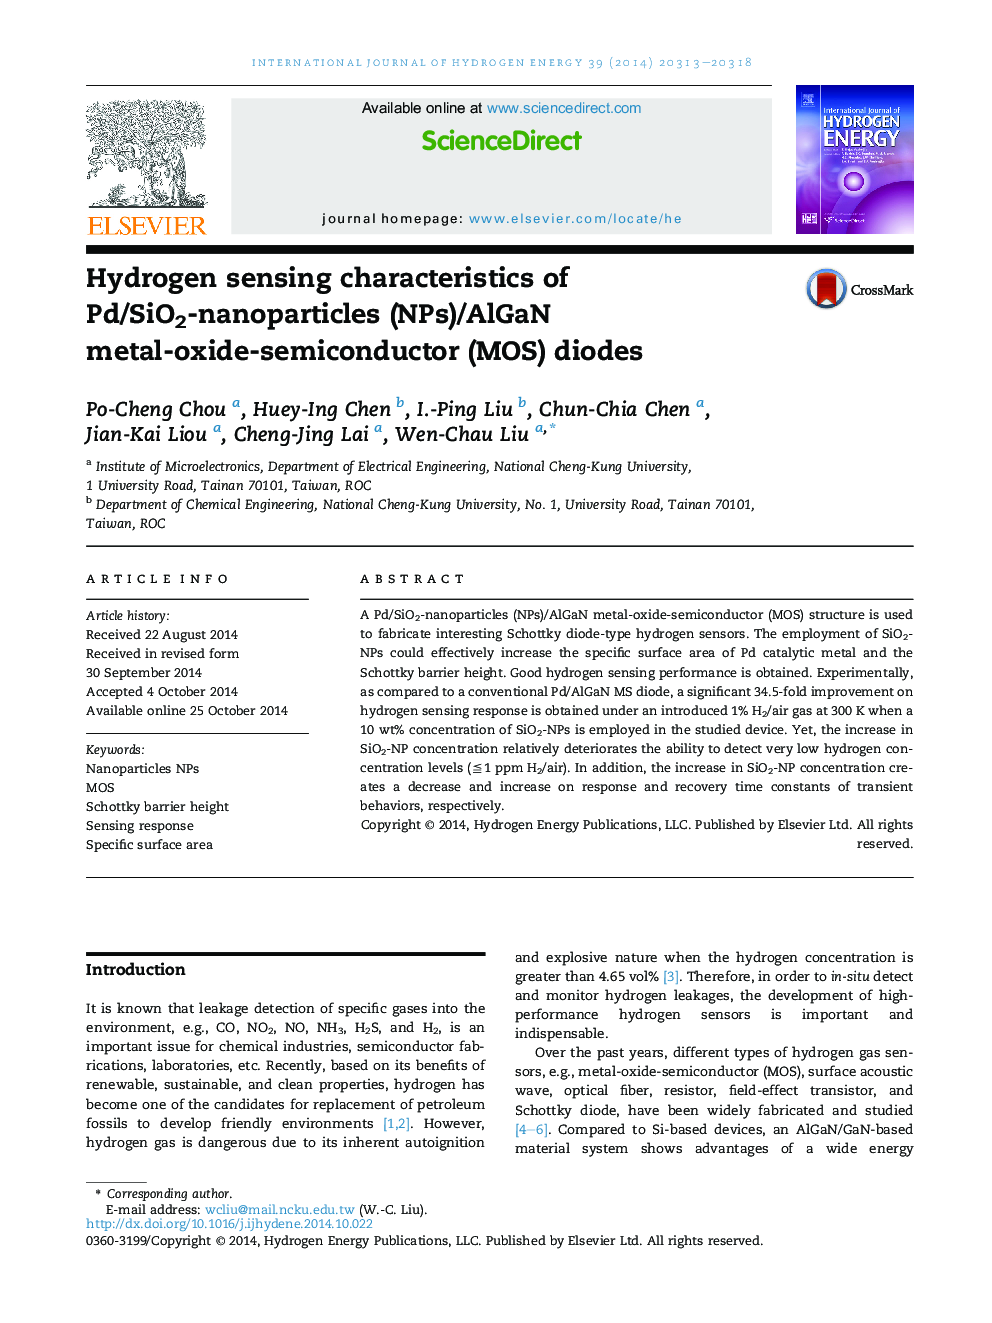 Hydrogen sensing characteristics of Pd/SiO2-nanoparticles (NPs)/AlGaN metal-oxide-semiconductor (MOS) diodes